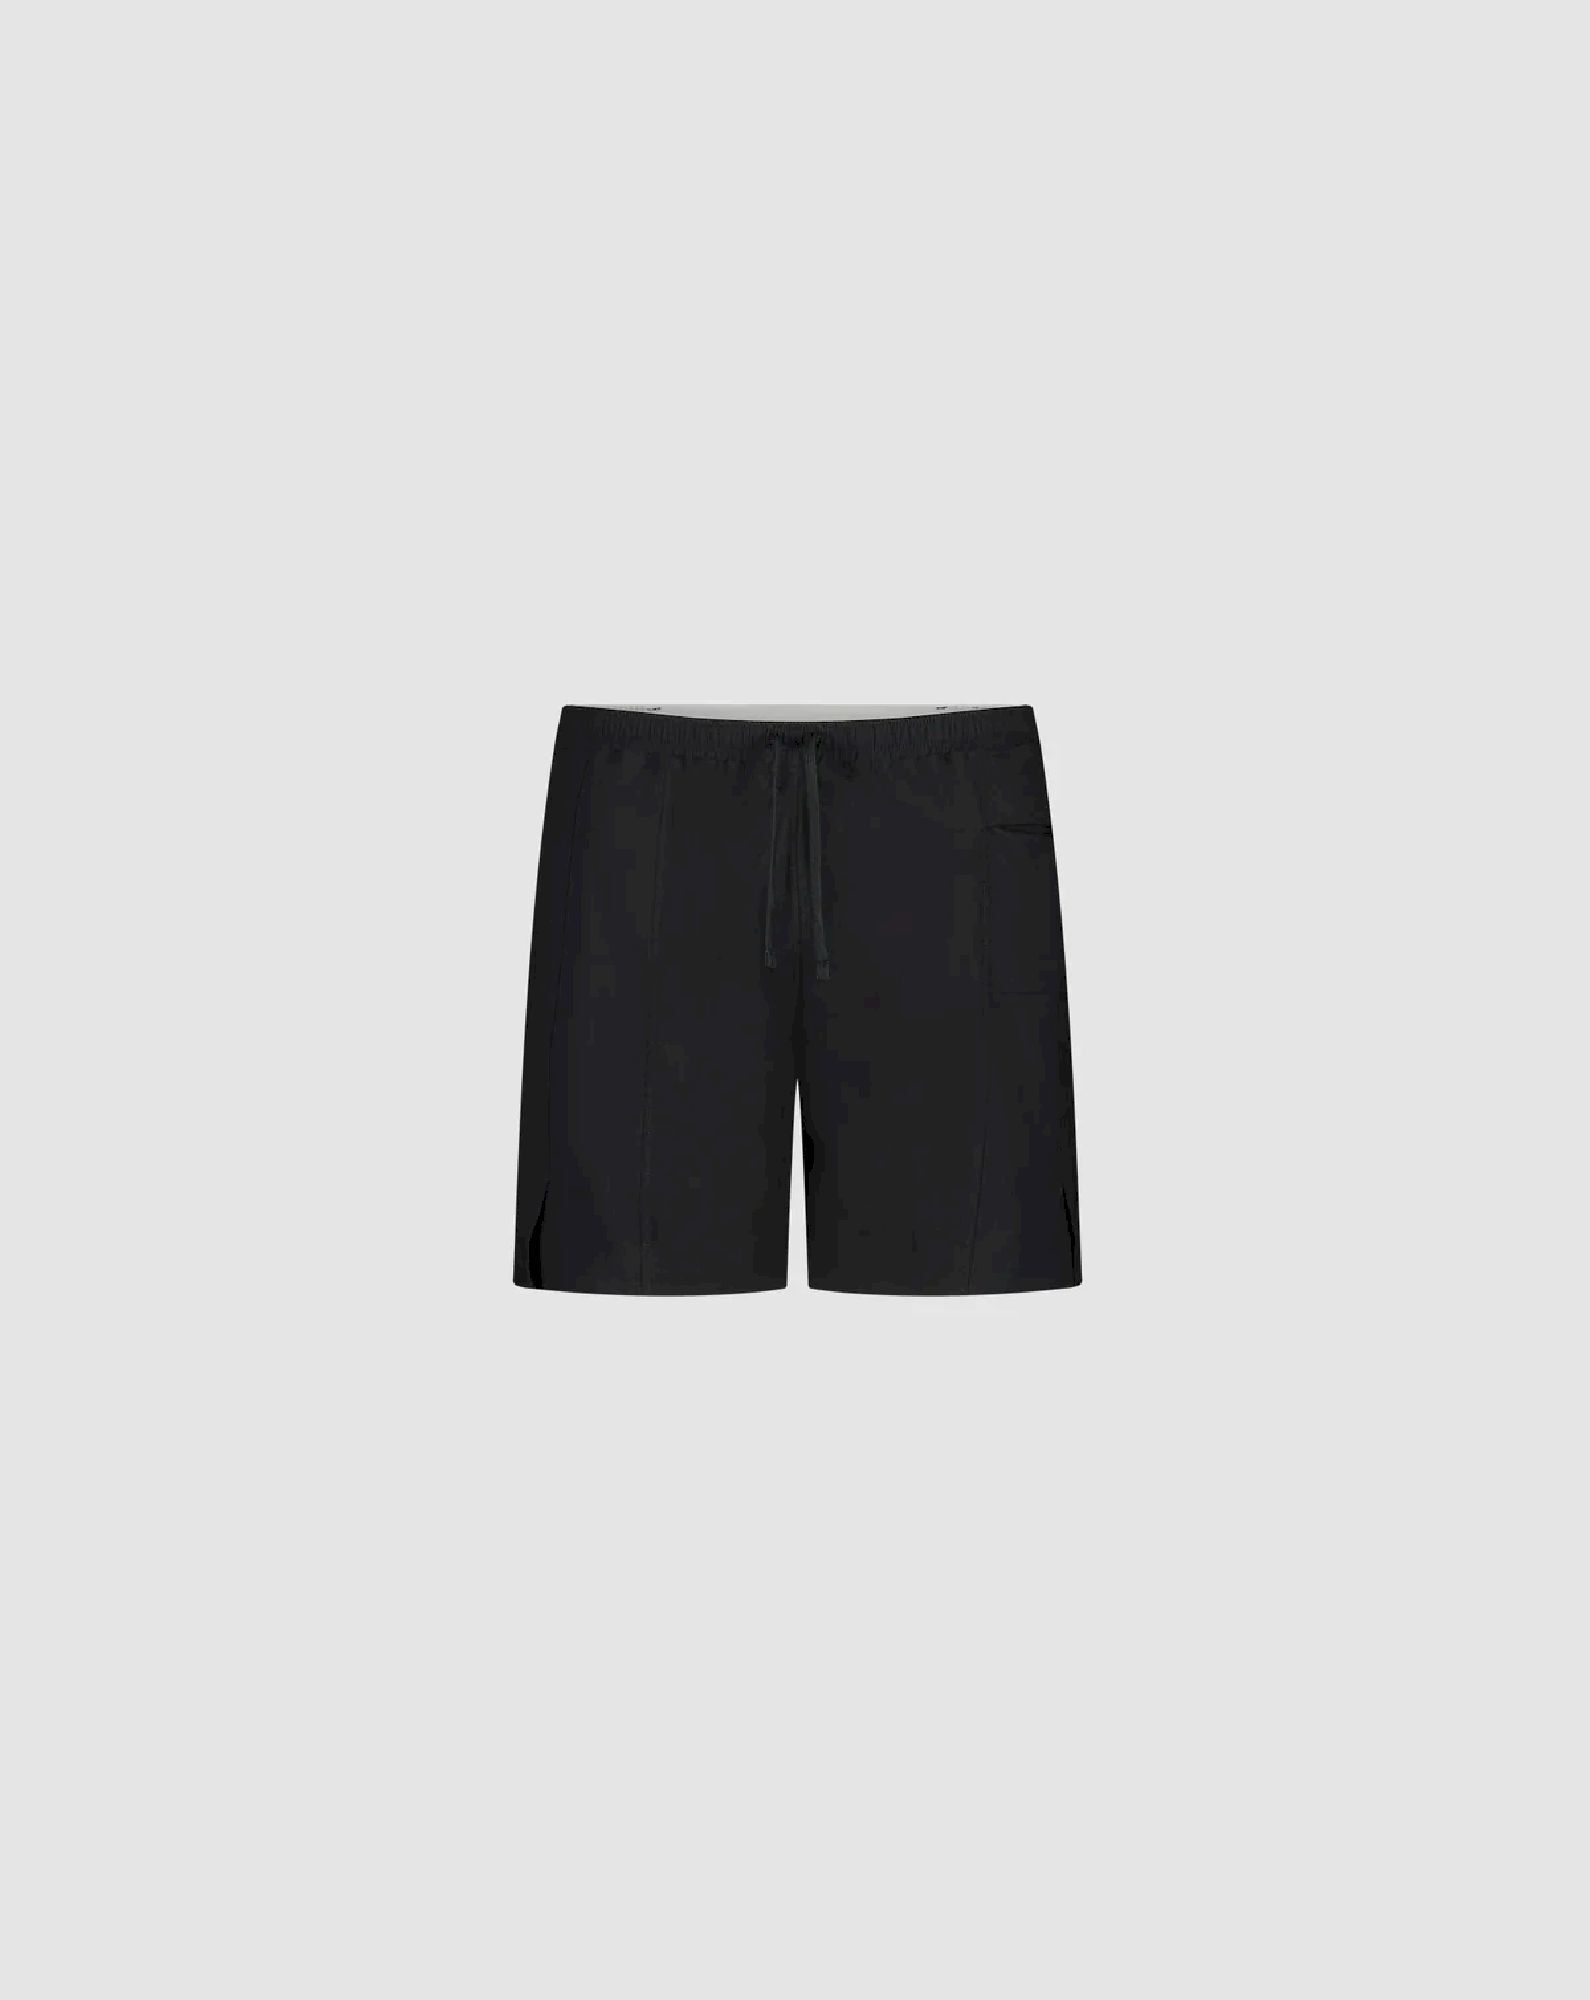 Hopaal Short Anti-Déchirure - Walking shorts - Men's | Hardloop